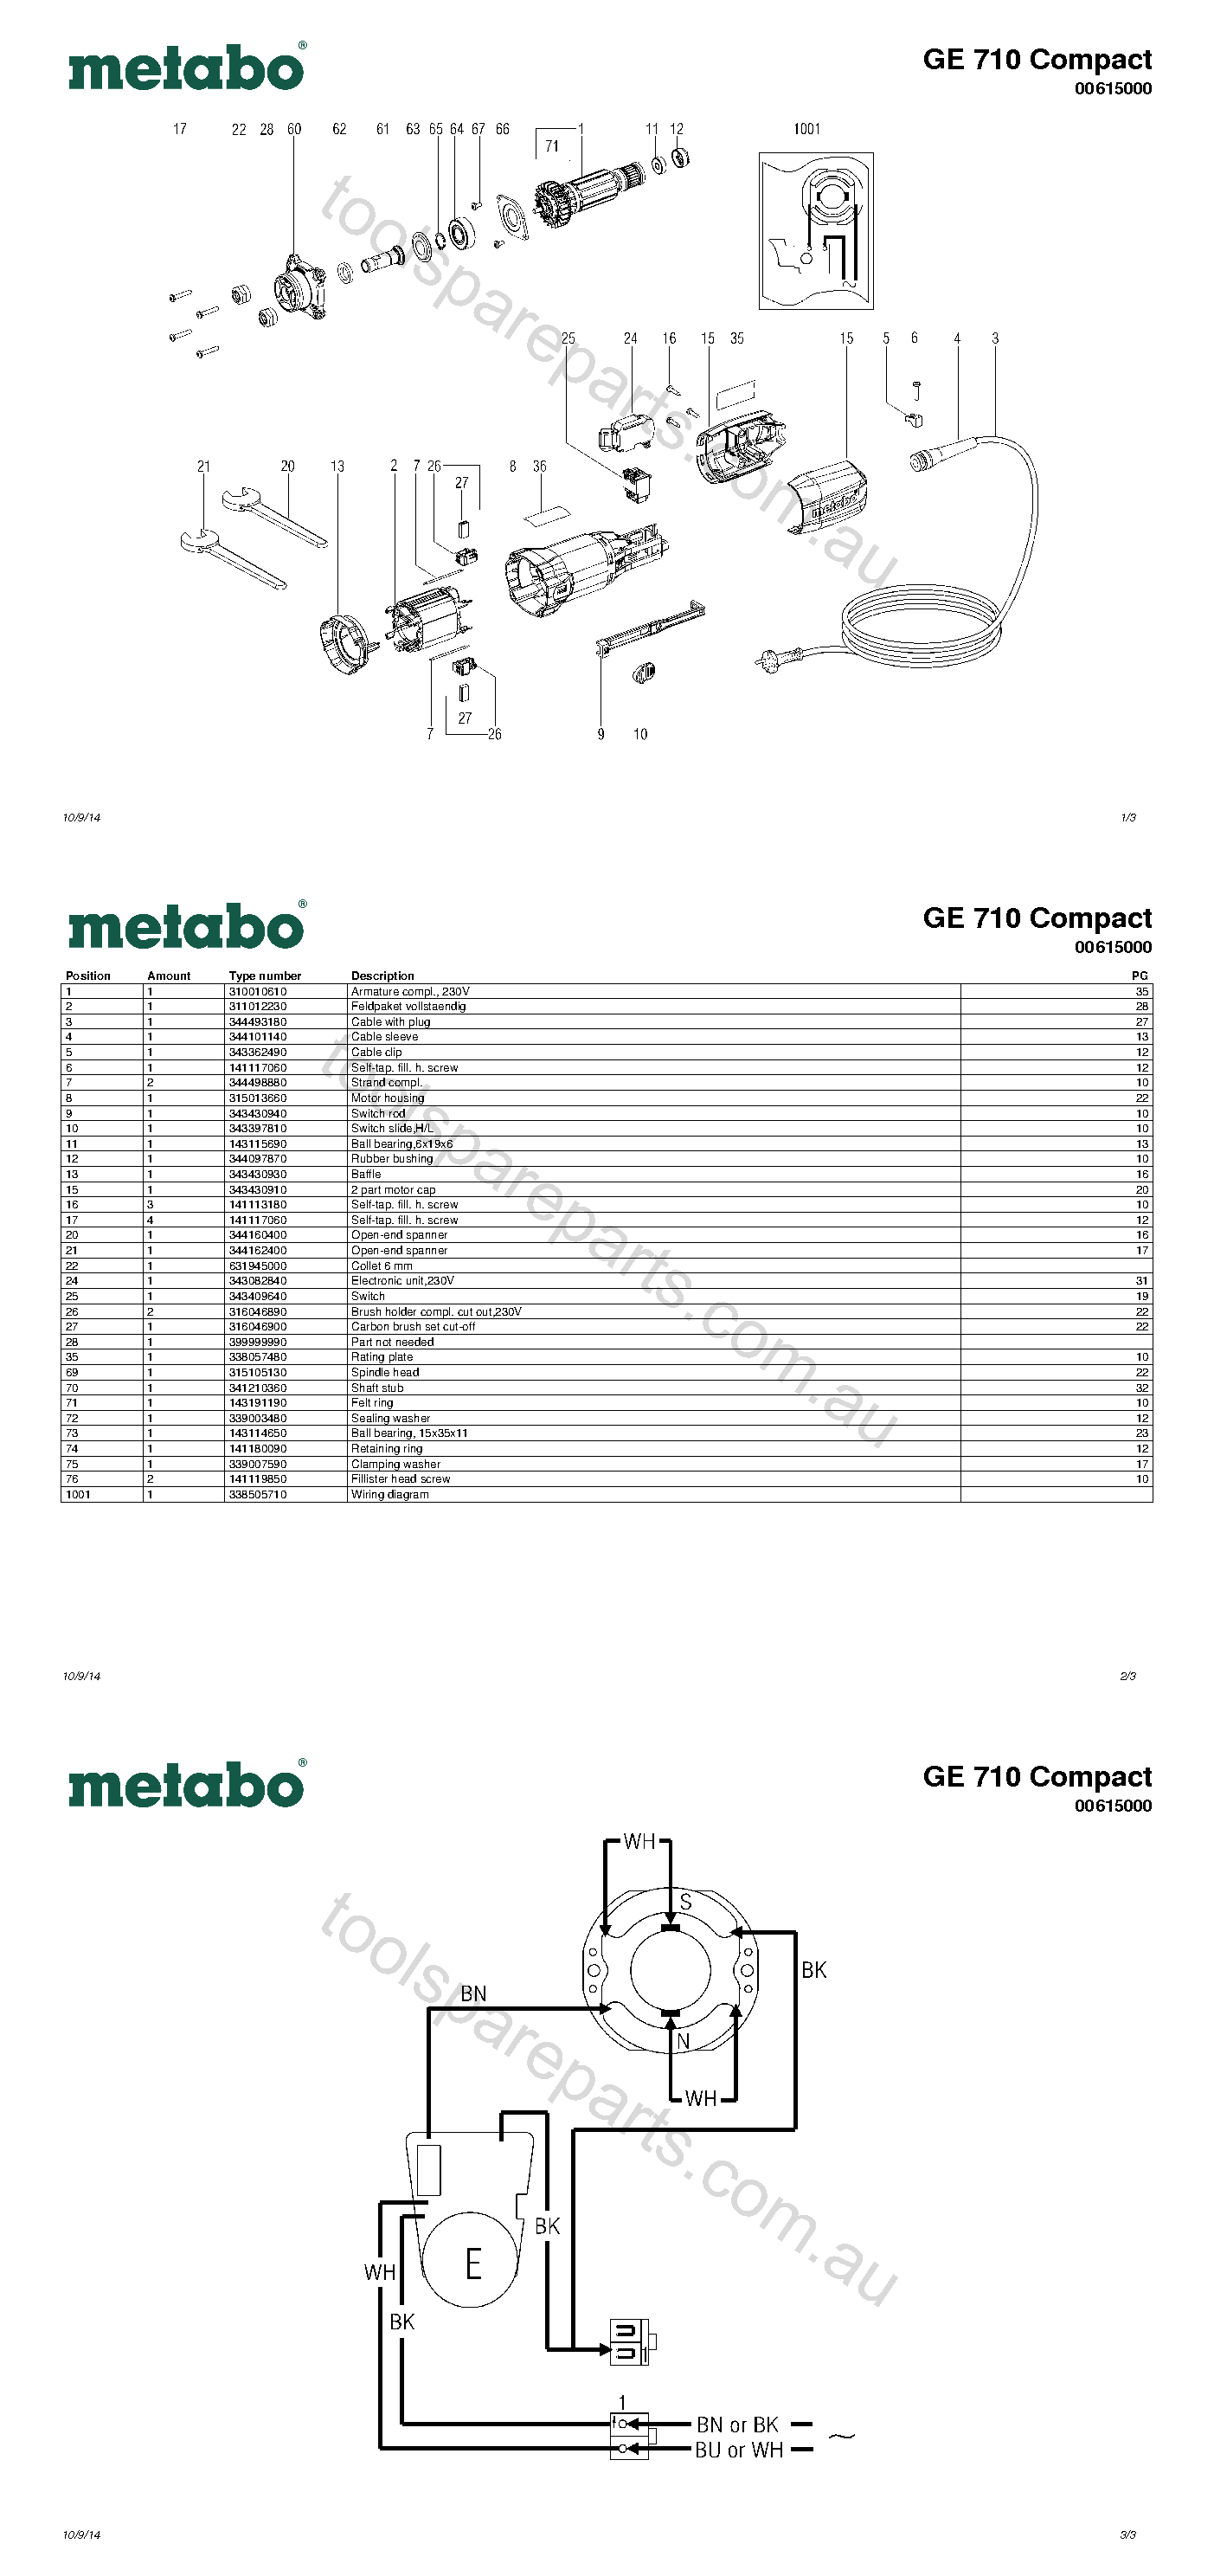 Metabo GE 710 Compact 00615000  Diagram 1